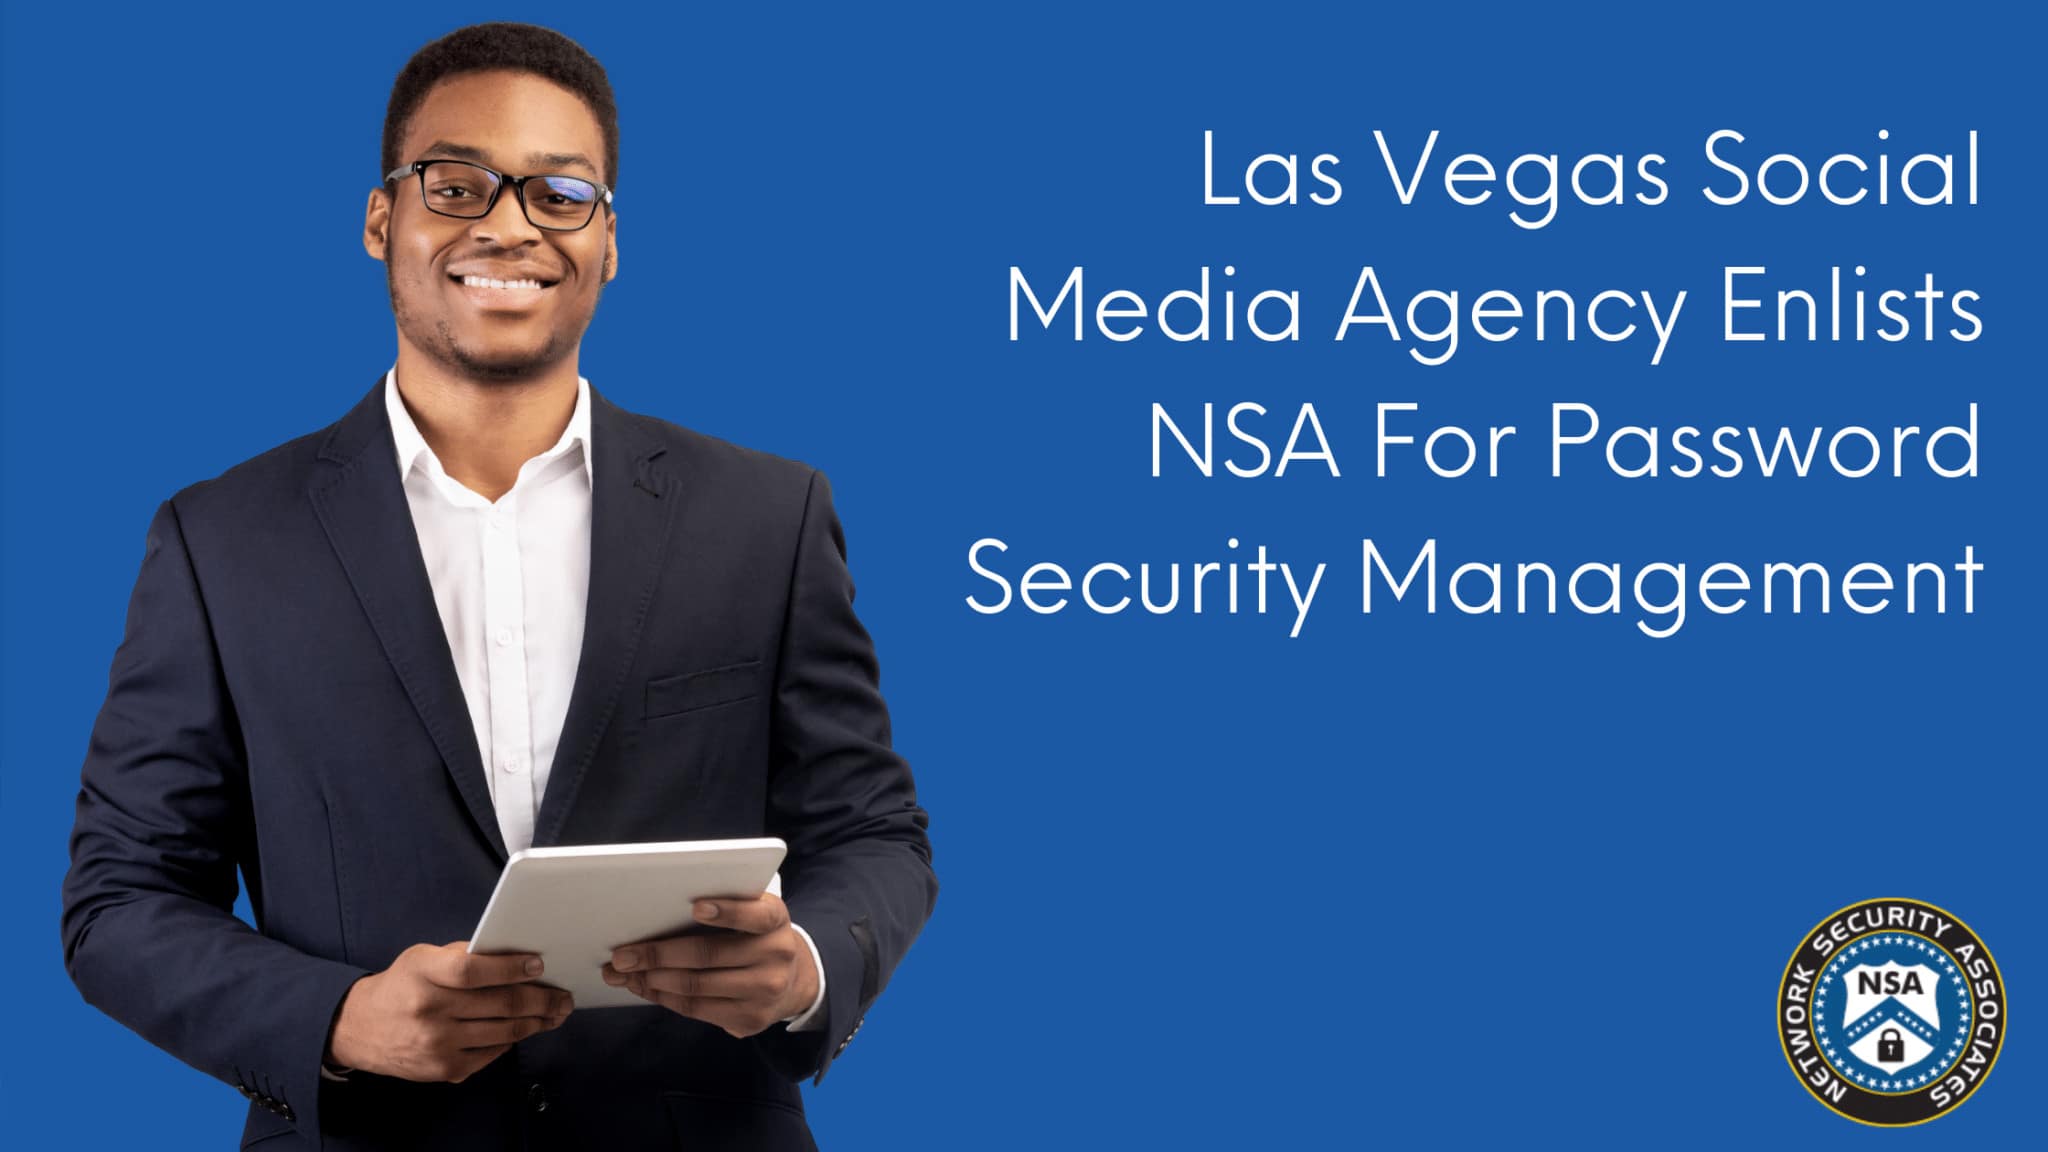 Las Vegas Social Media Agency Enlists NSA For Password Security Management